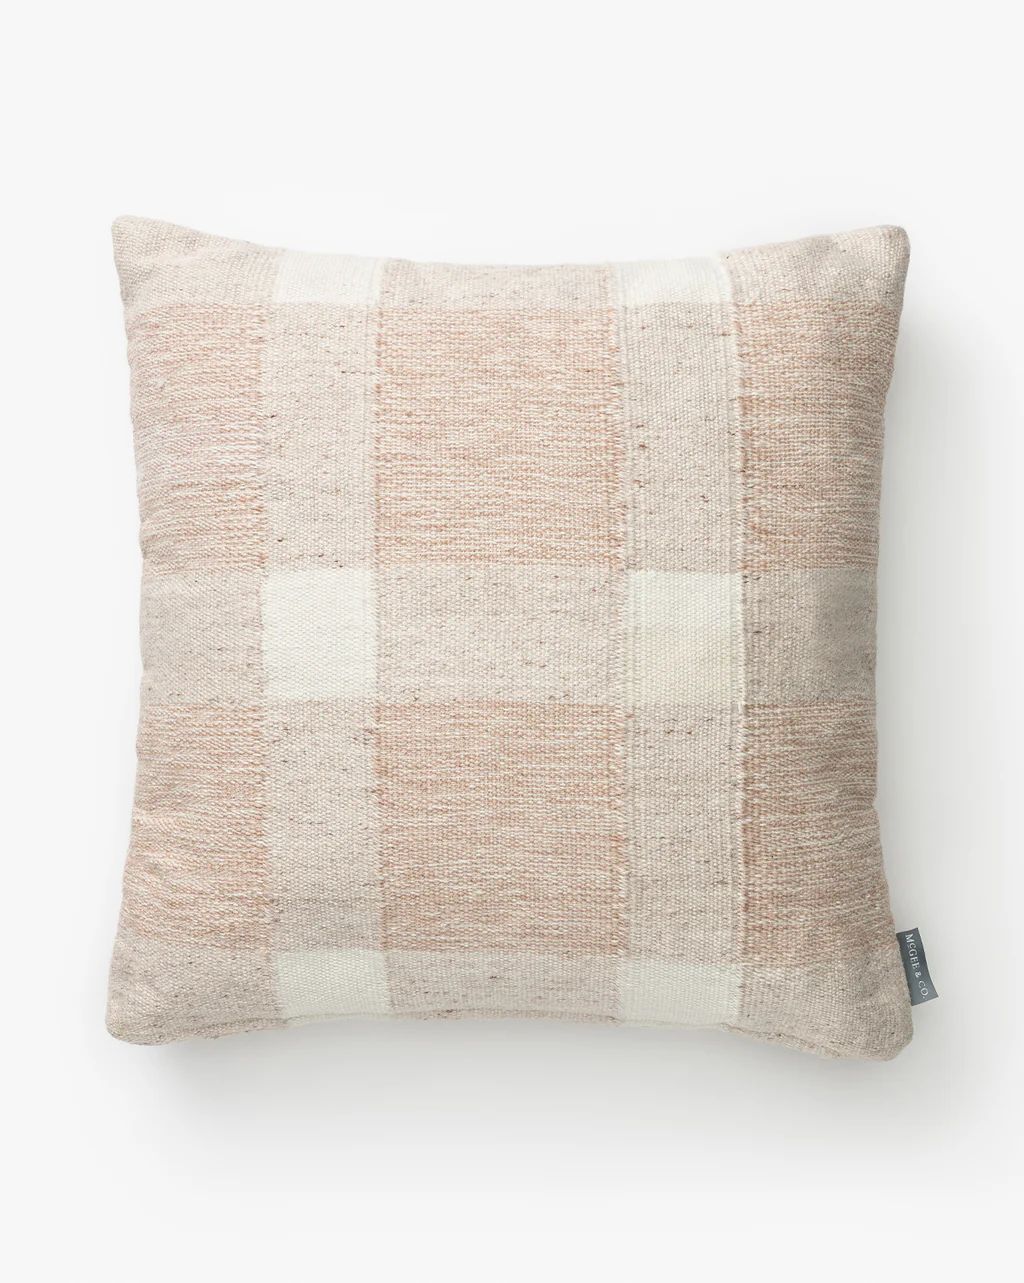 Trish Indoor/Outdoor Pillow | McGee & Co.